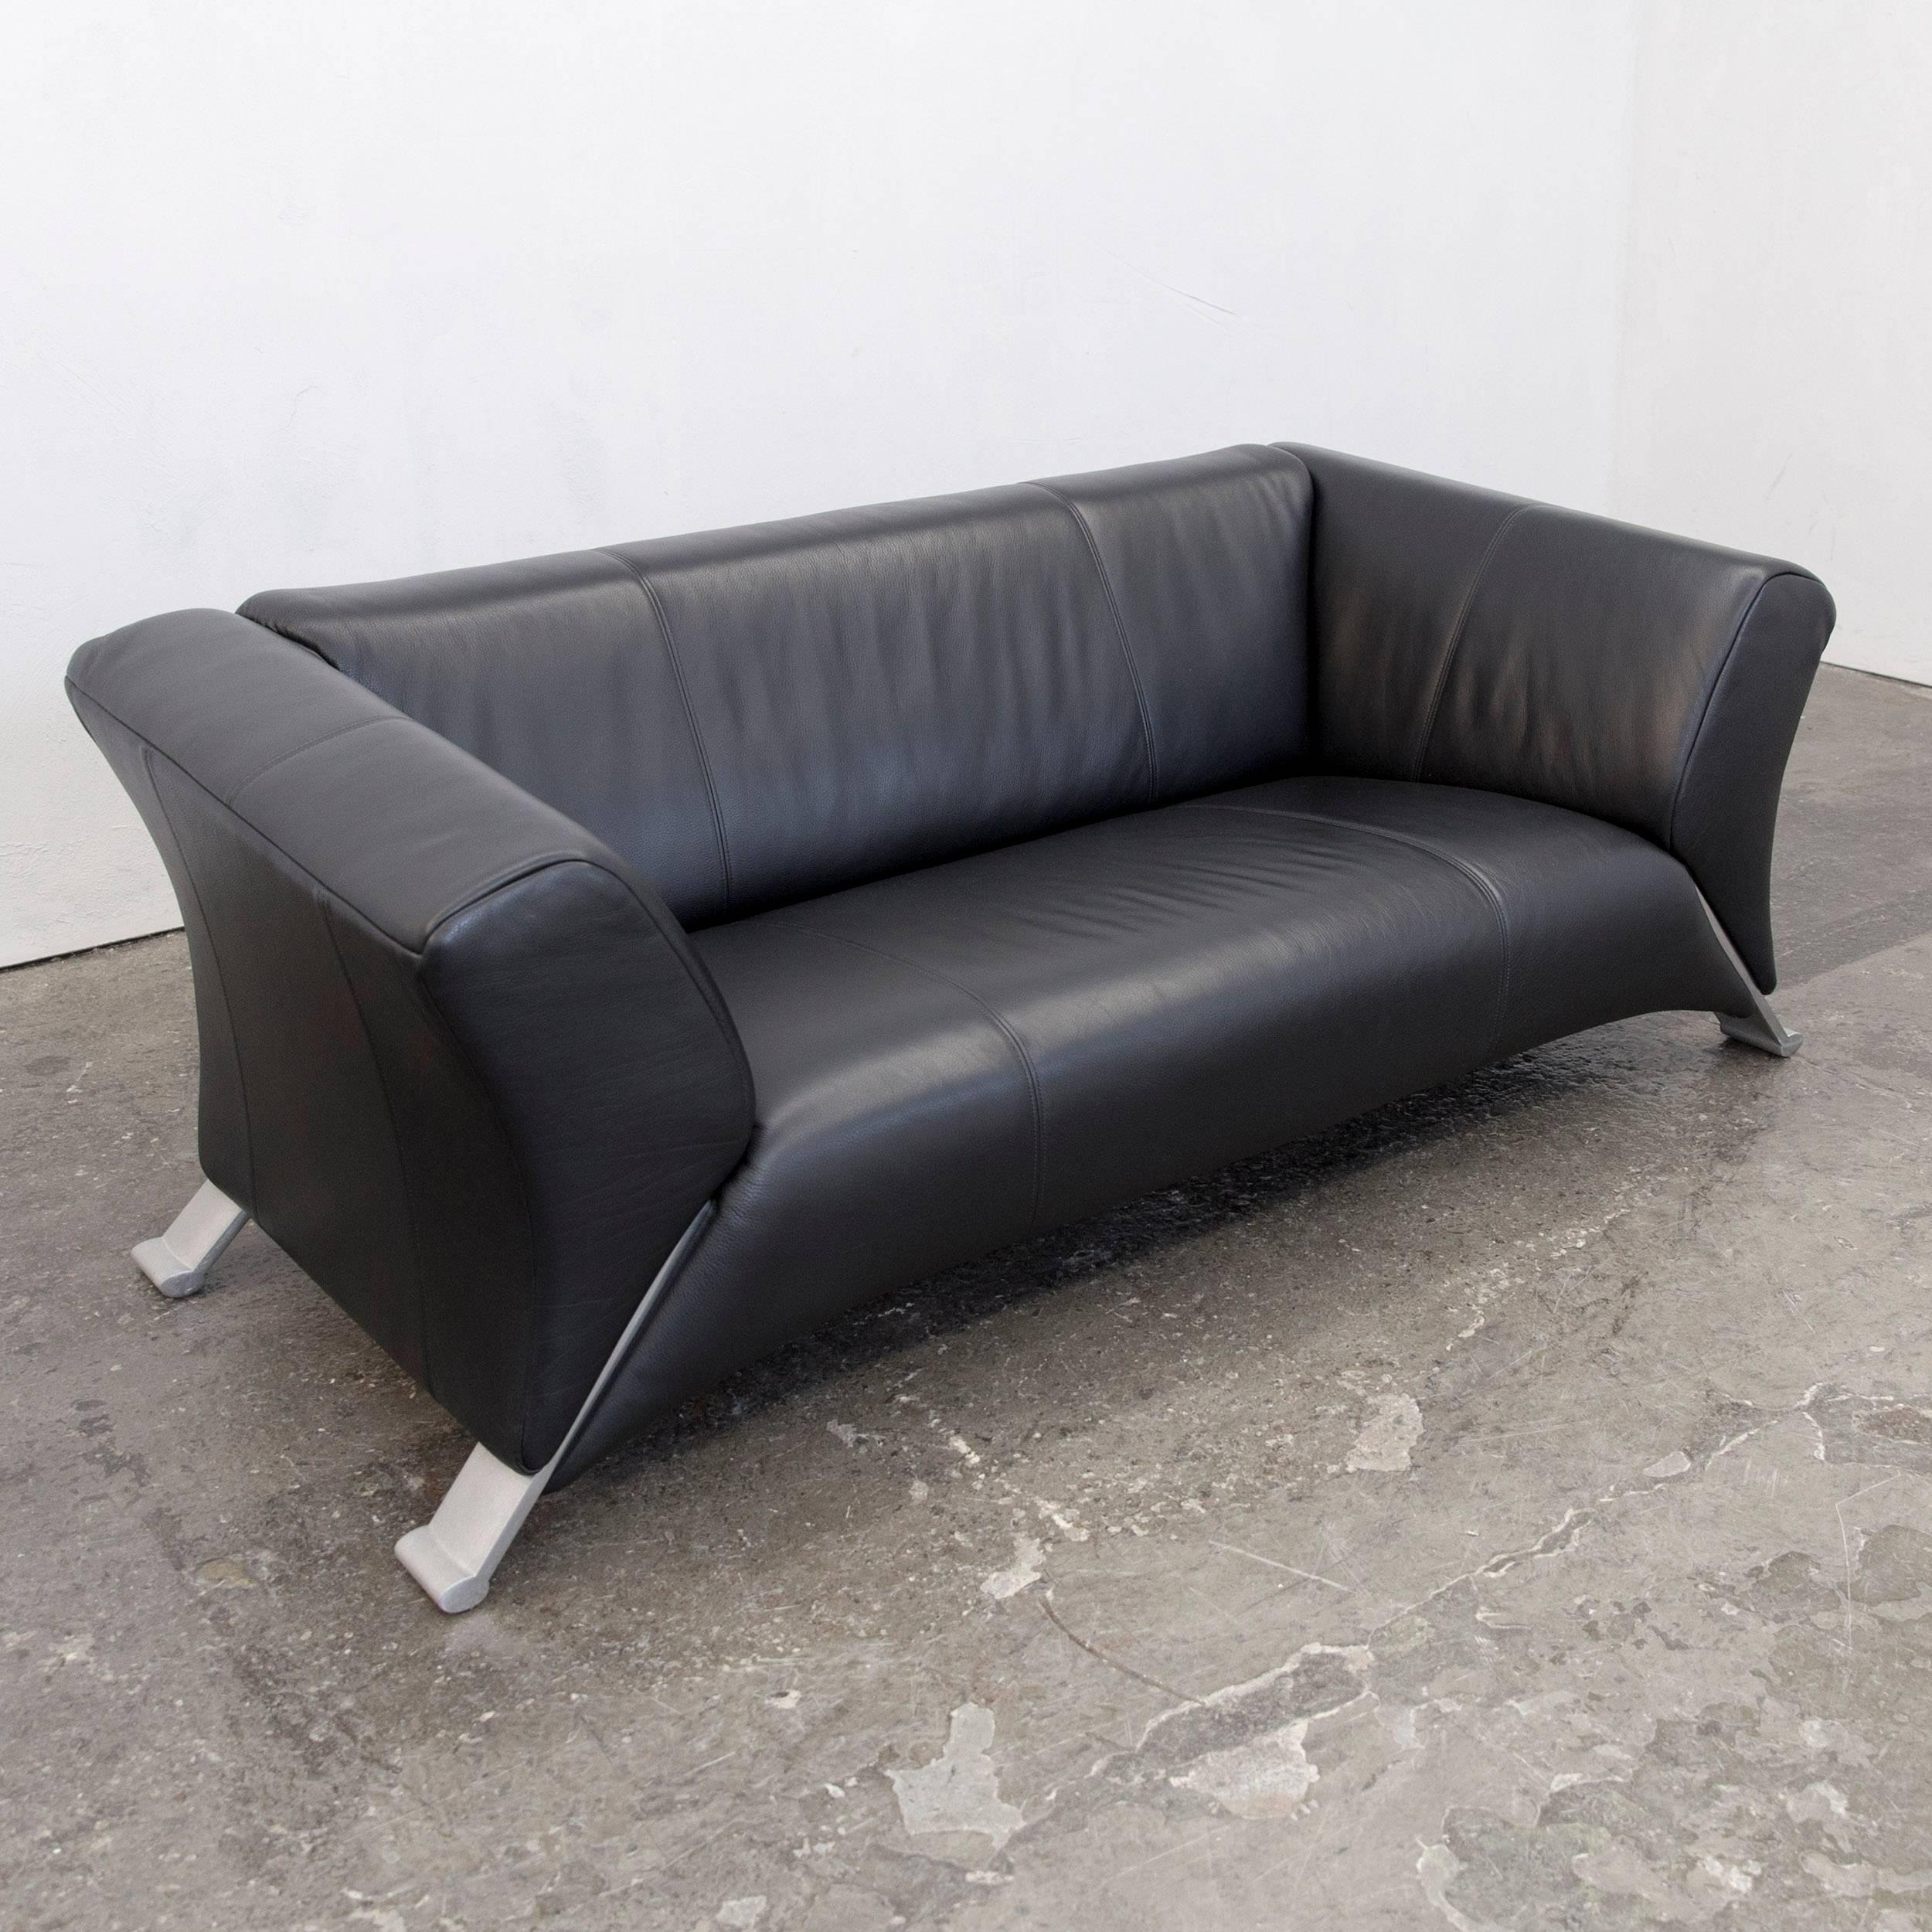 German Rolf Benz 322 Designer Sofa Black Two-Seat Leather Modern